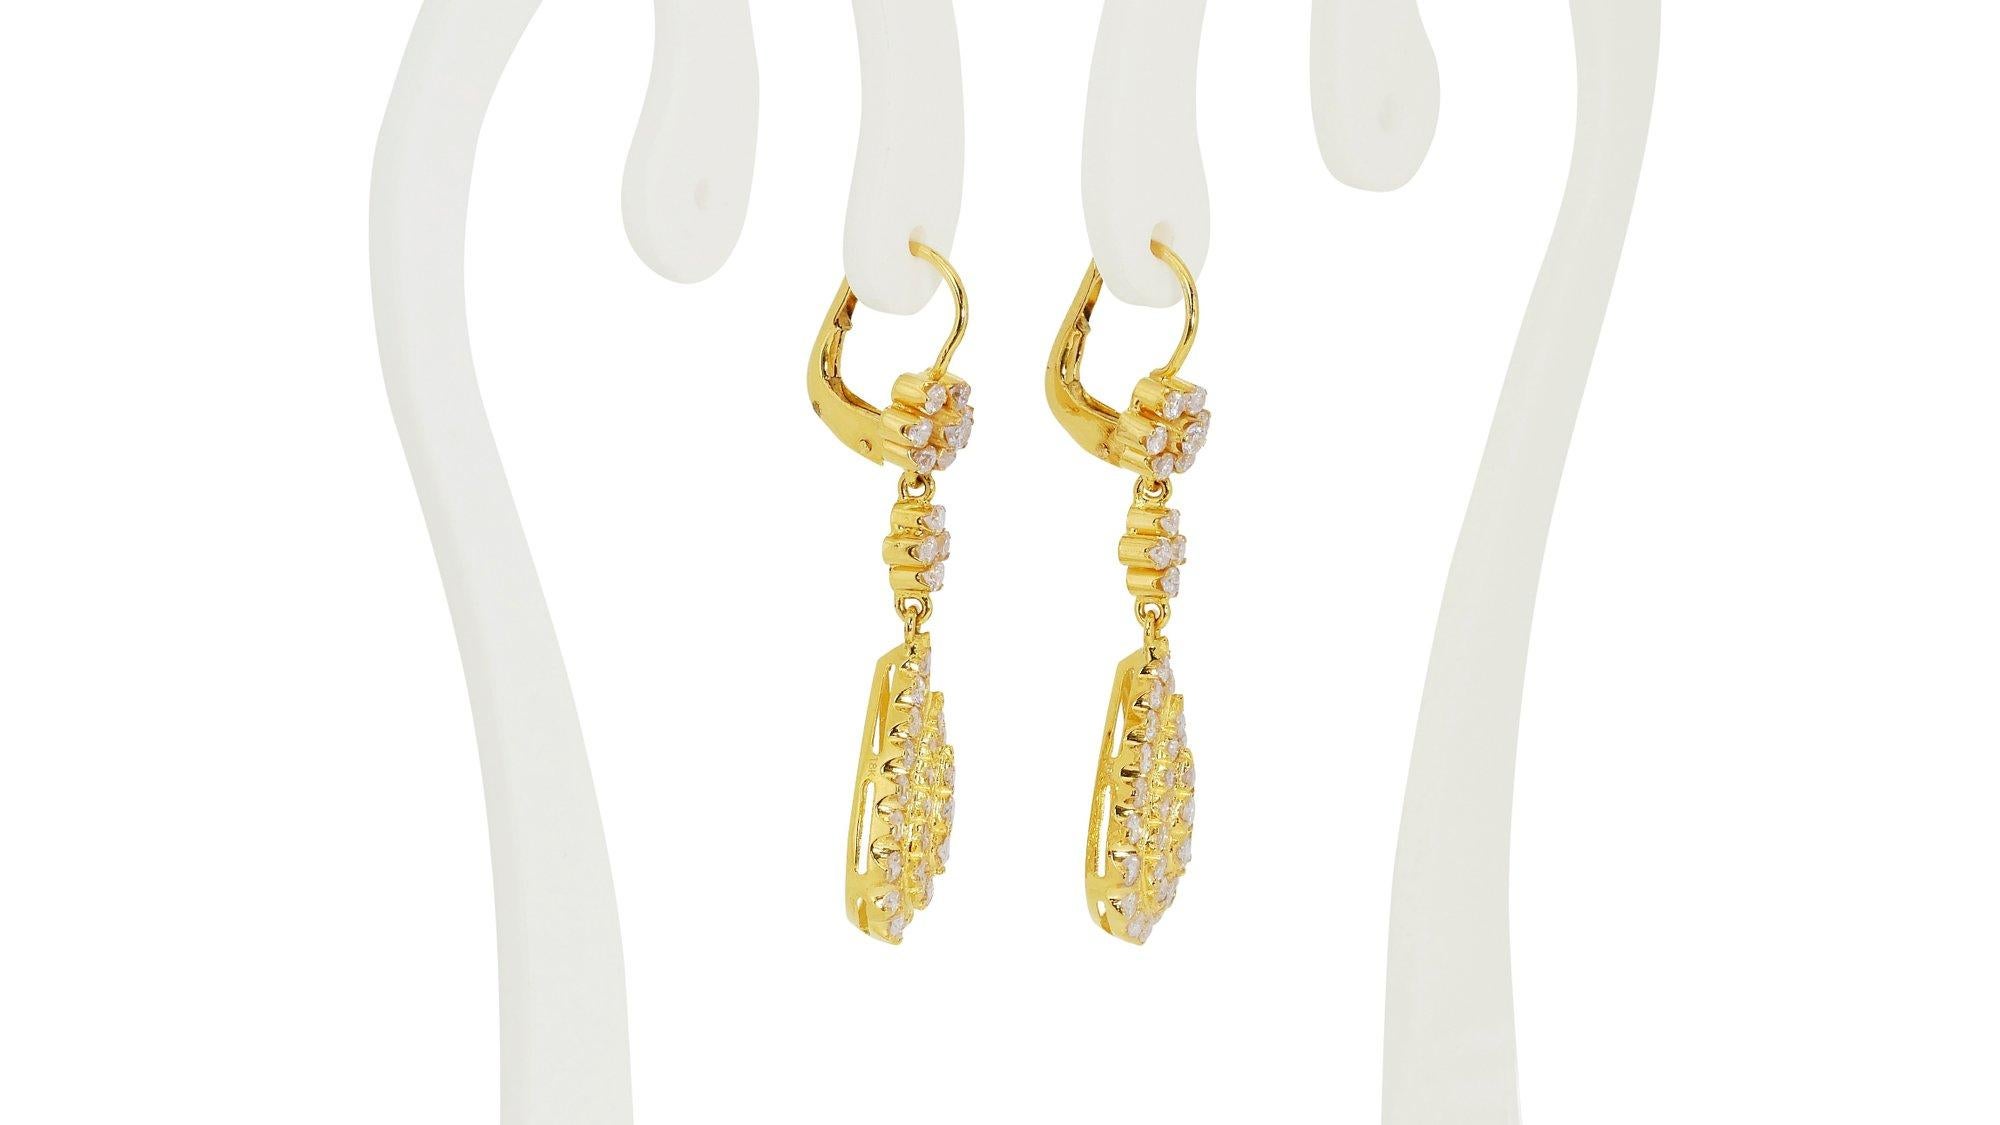 Marvelous 18k Yellow Gold Drop Earrings w/ 2ct Natural Diamonds IGI Certificate For Sale 2